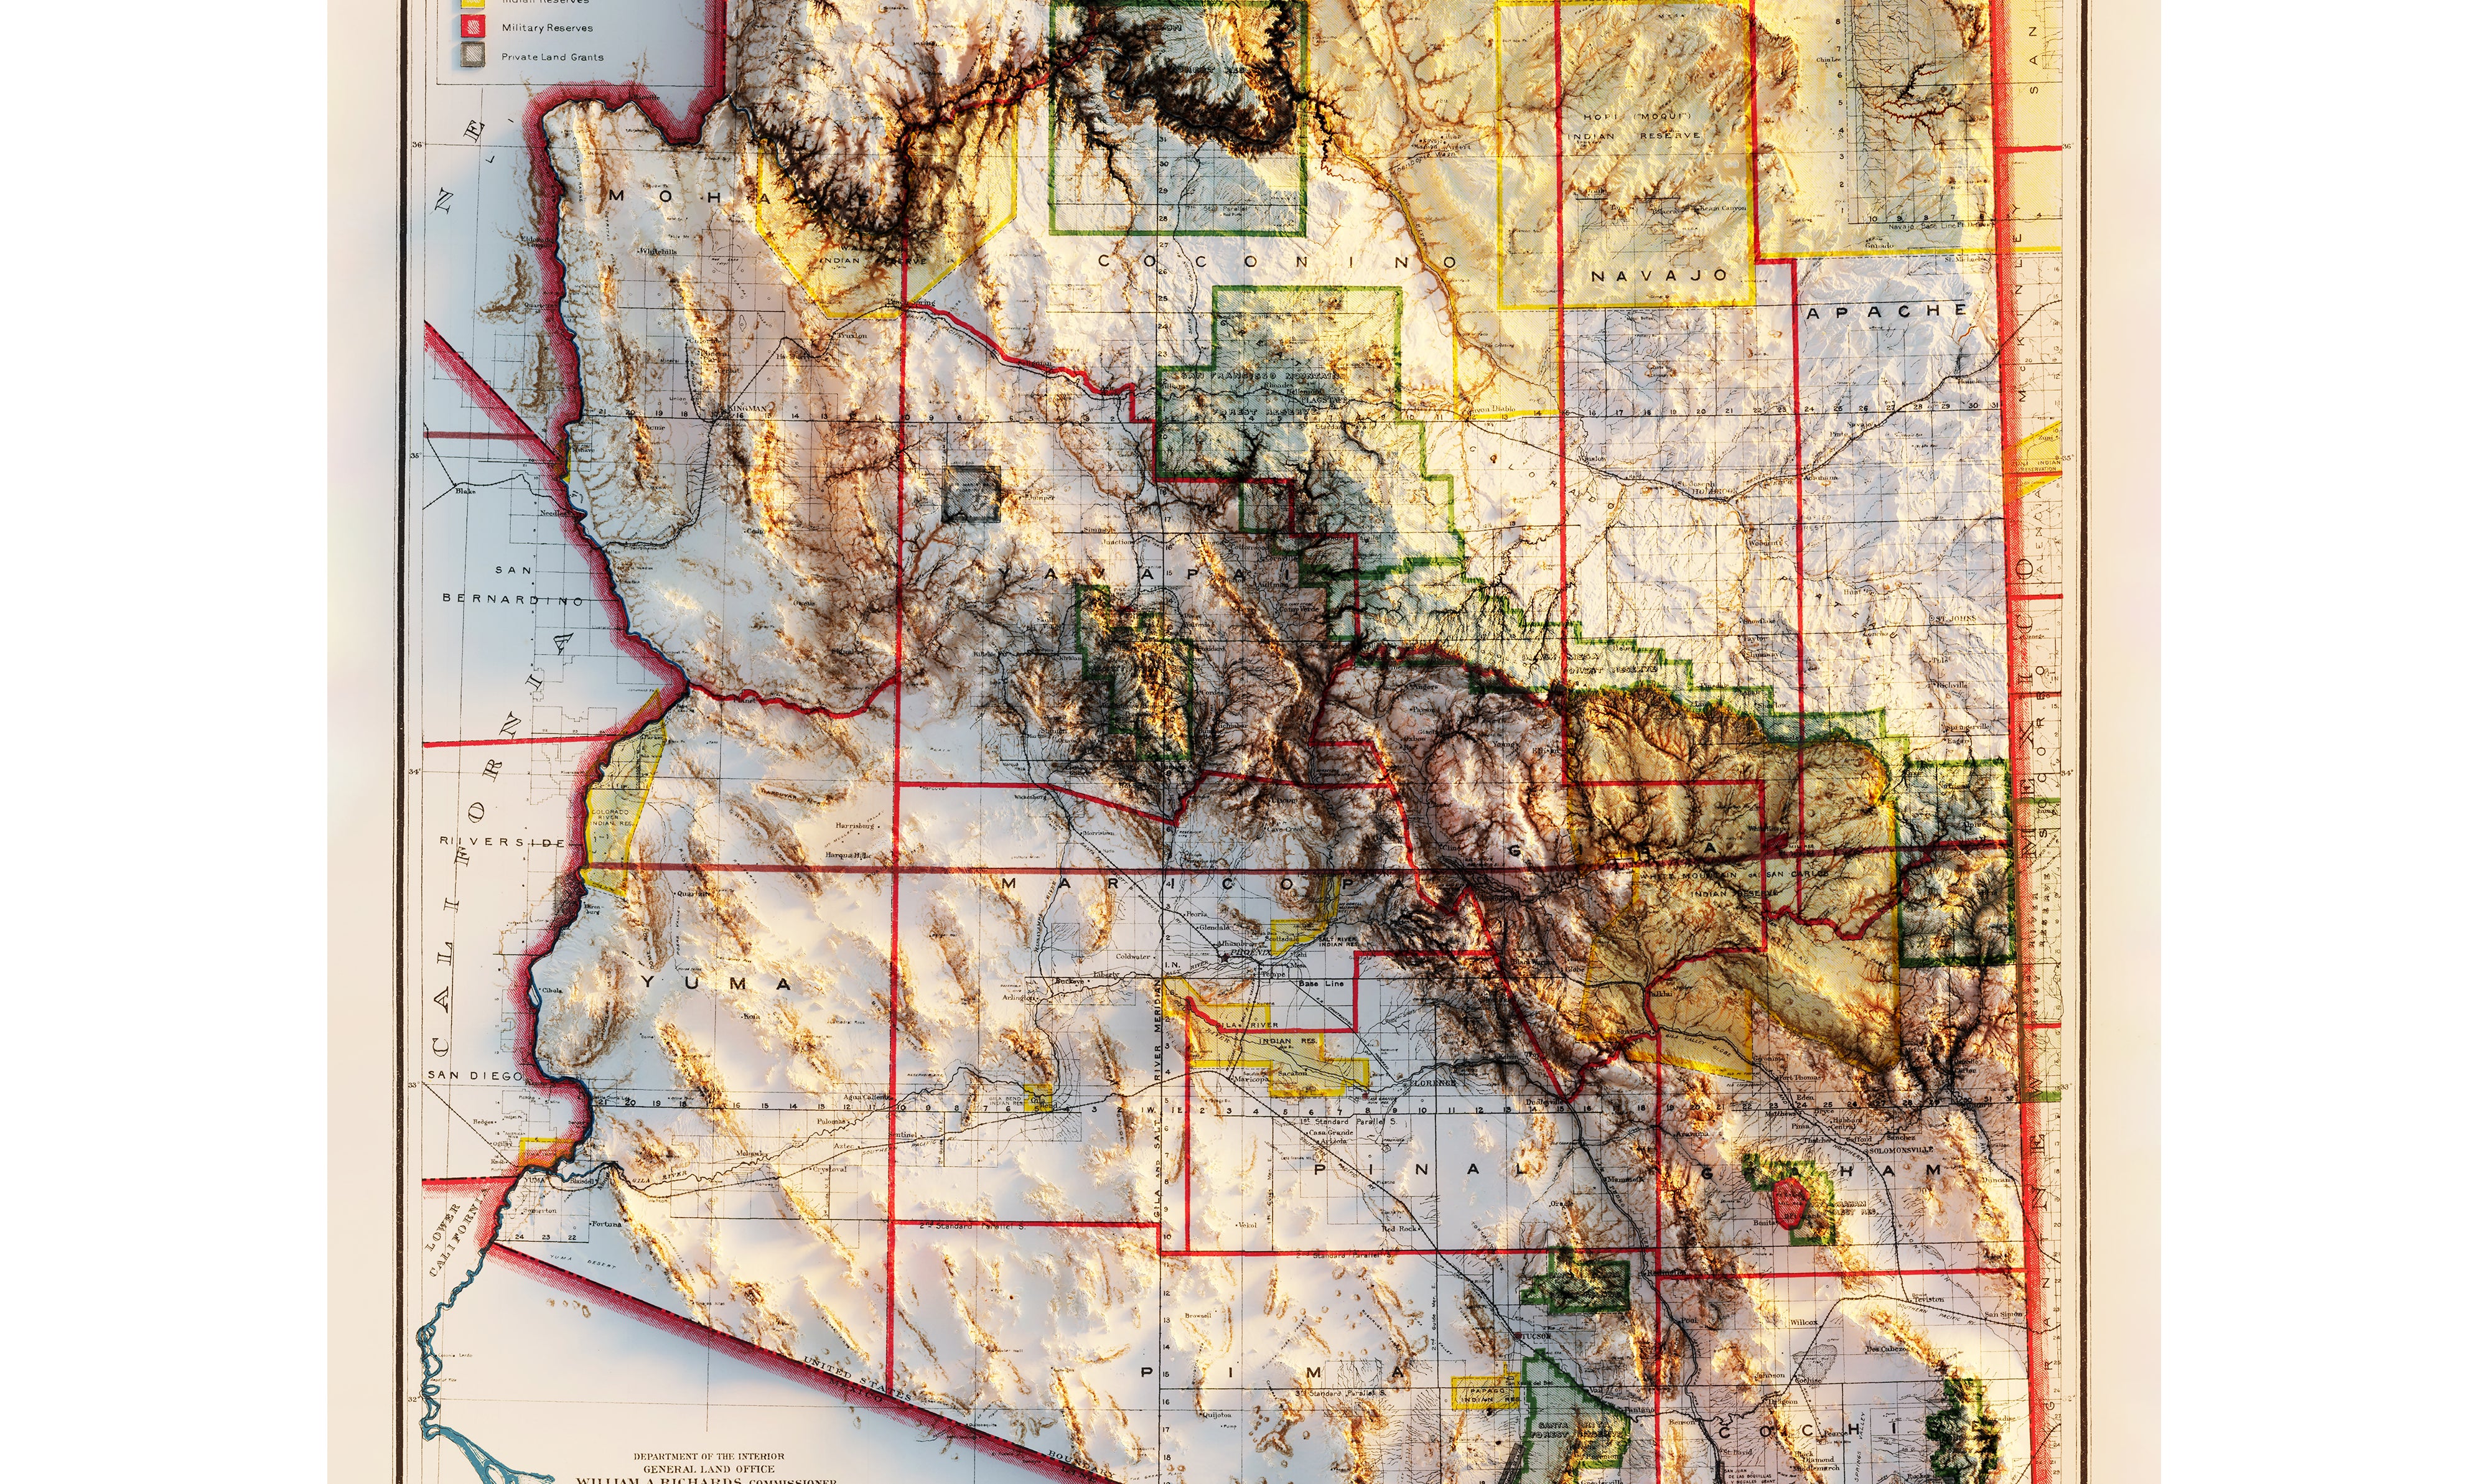 Vintage Arizona Relief Map - 1903